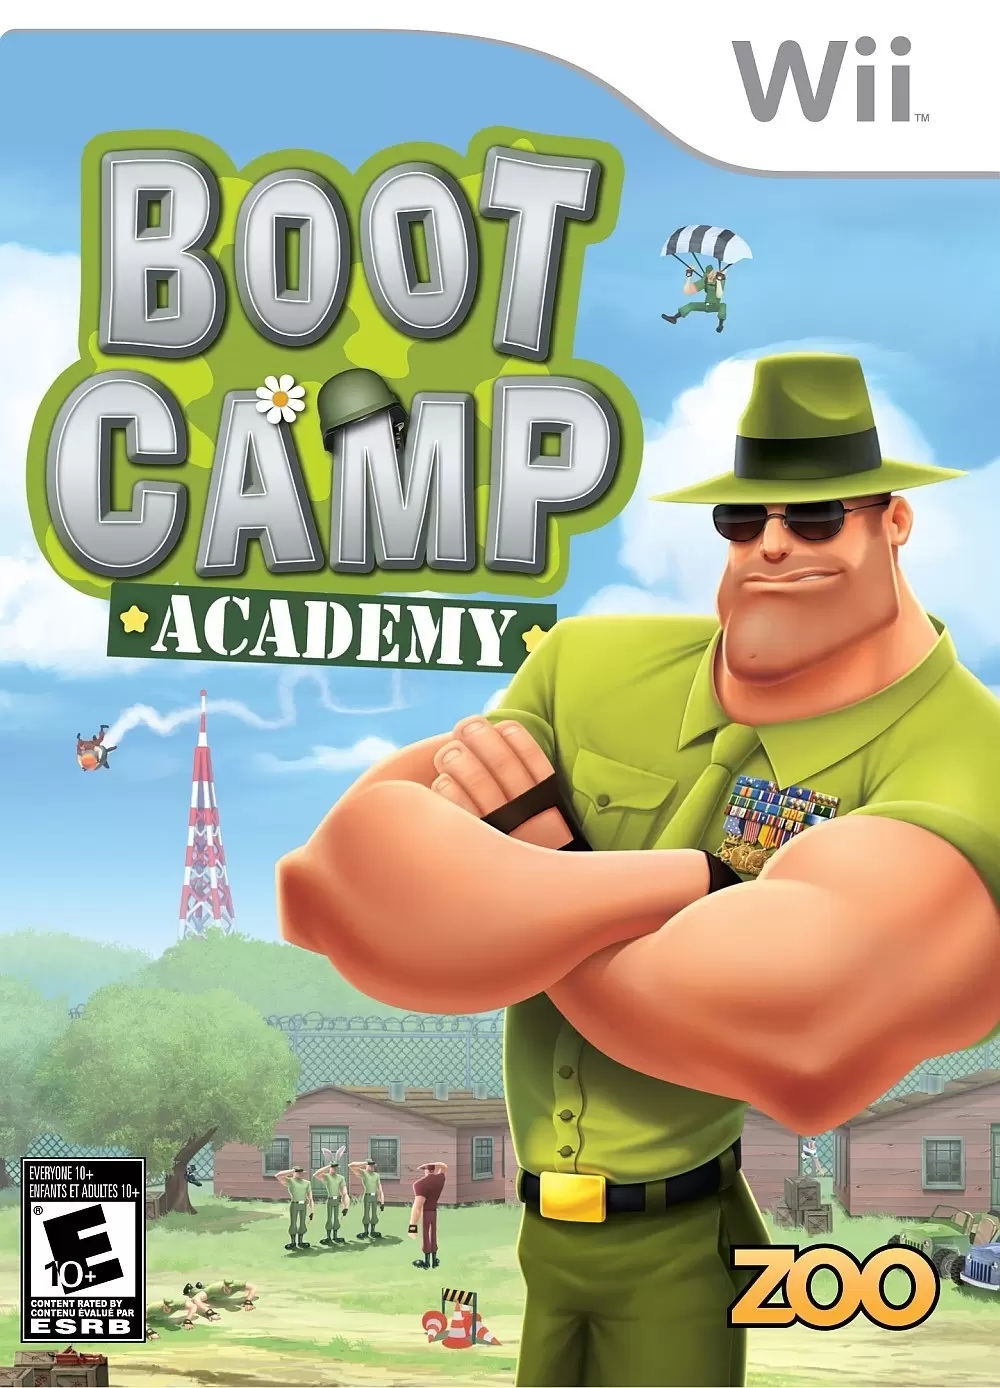 Nintendo Wii Games - Boot Camp Academy